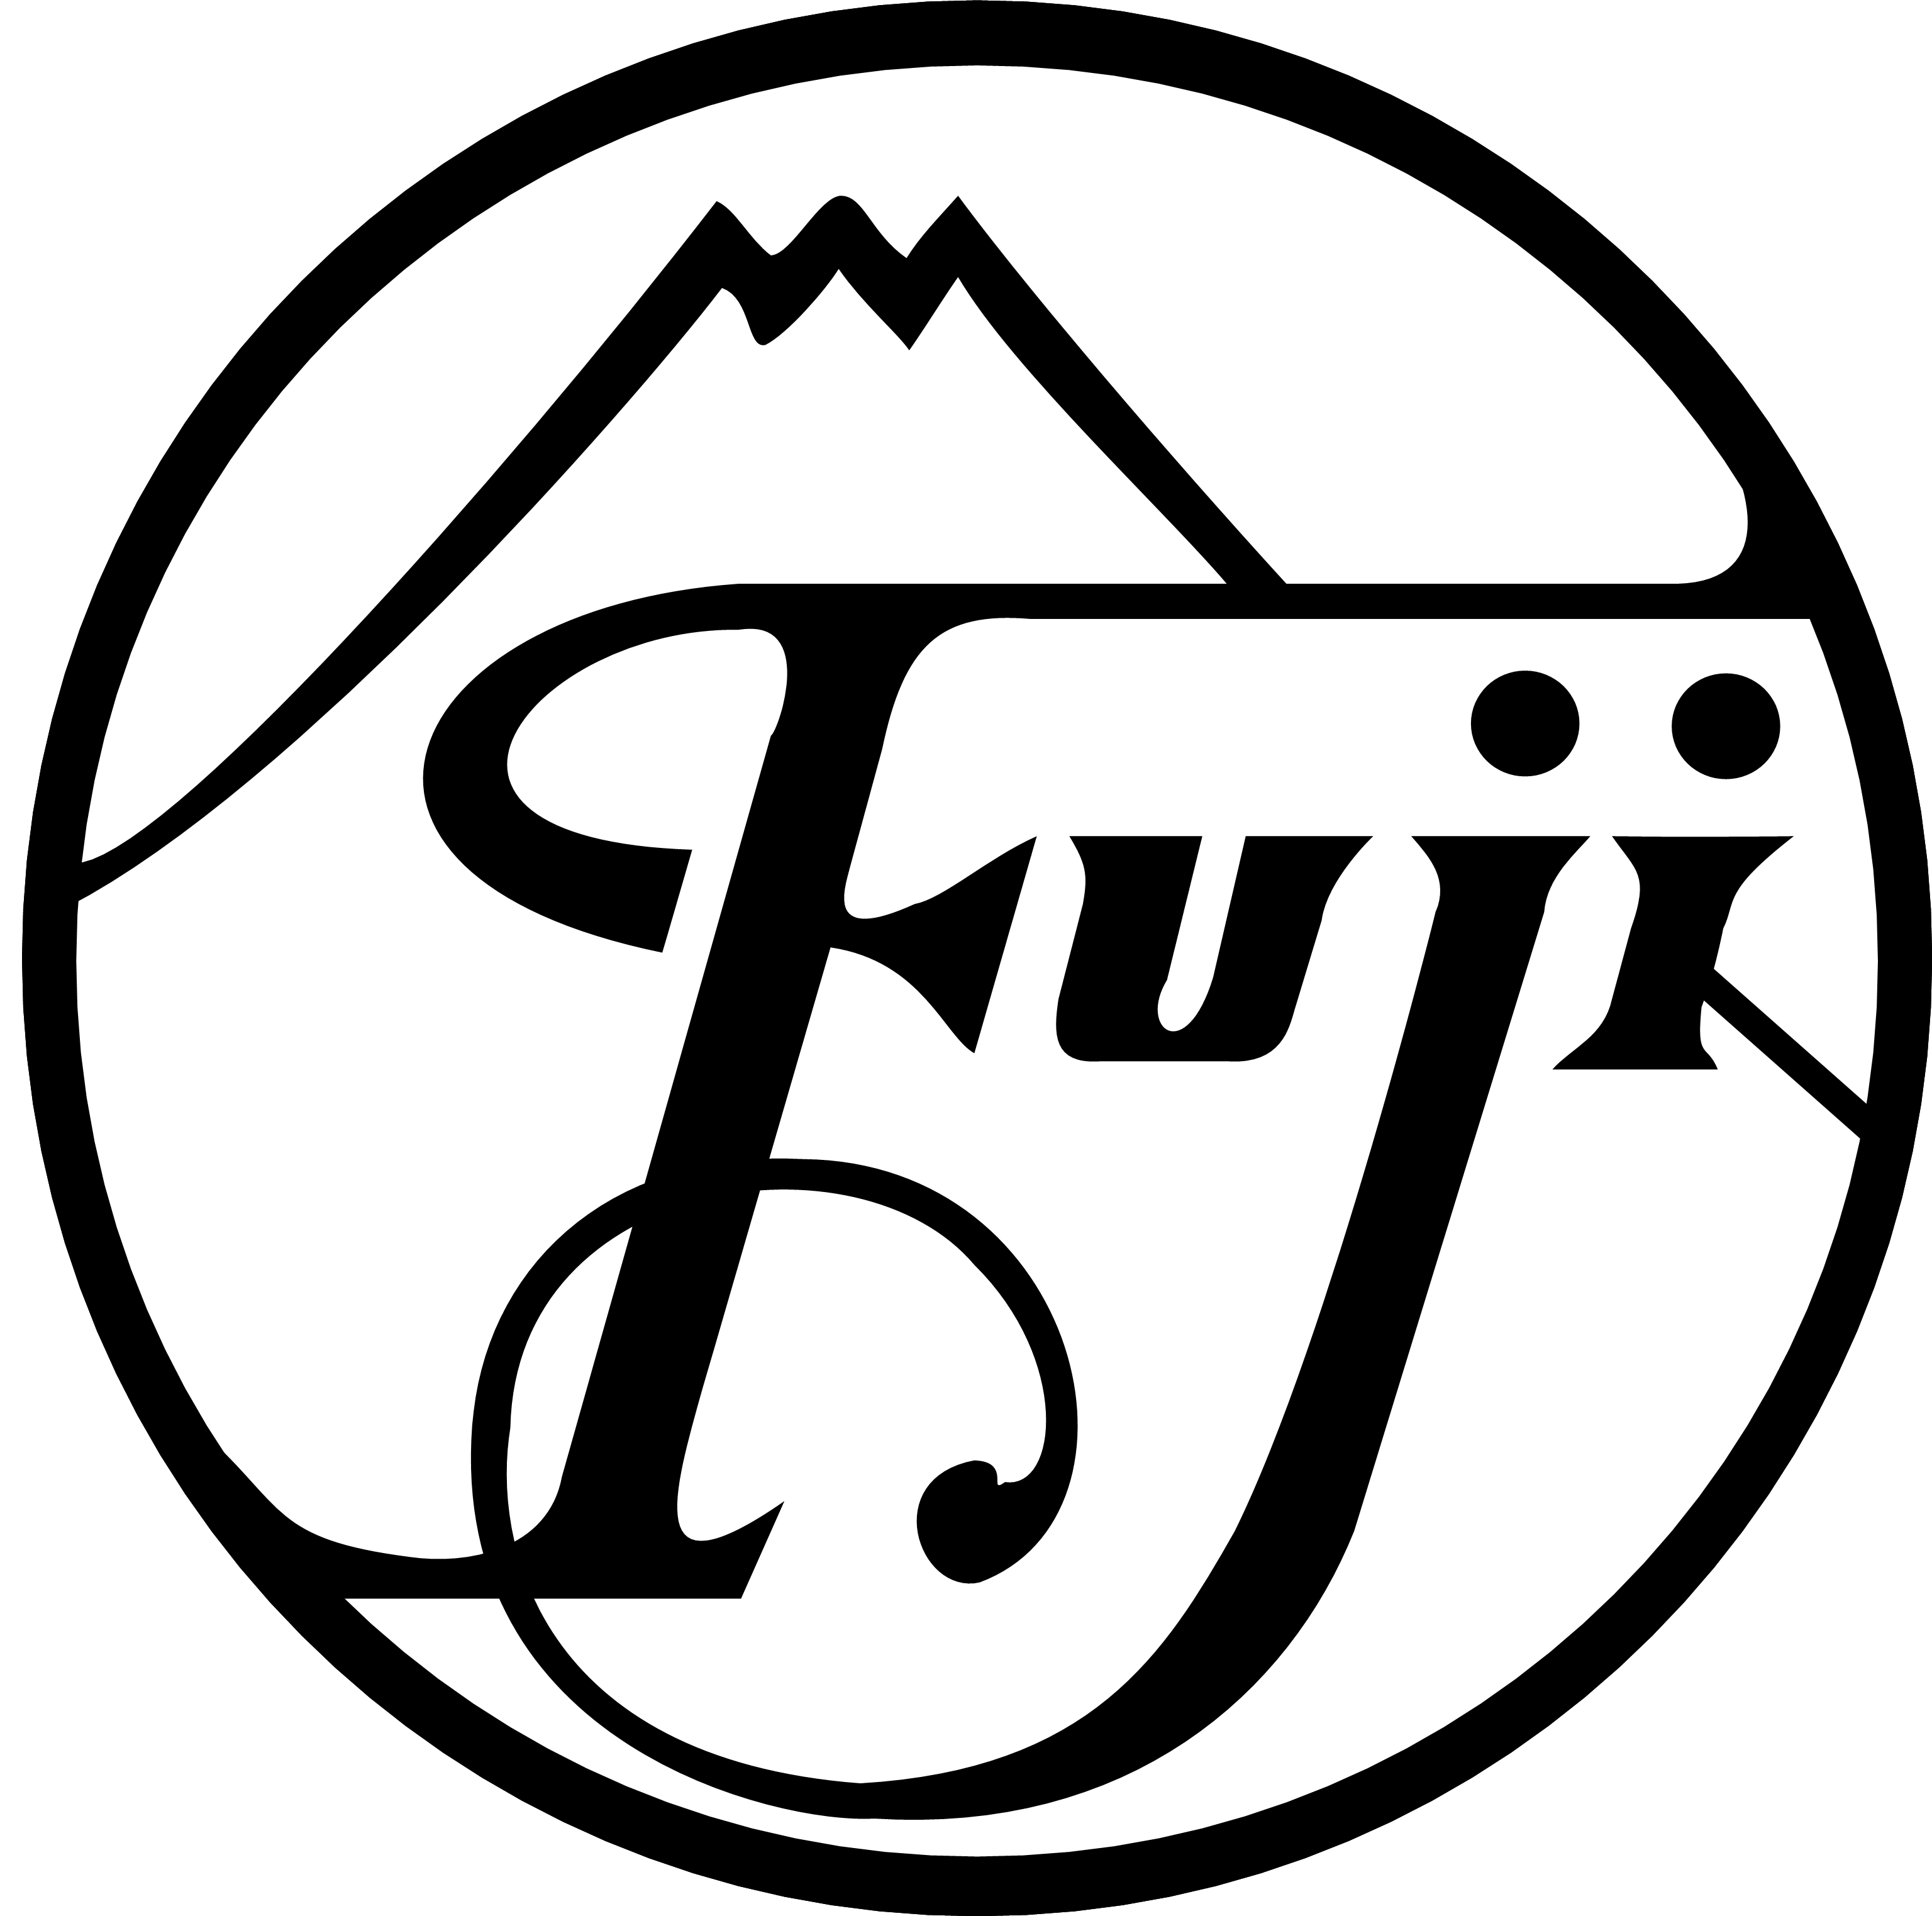 Fujifilm Logo - Image - Fujifilm 1934.png | Logopedia | FANDOM powered by Wikia